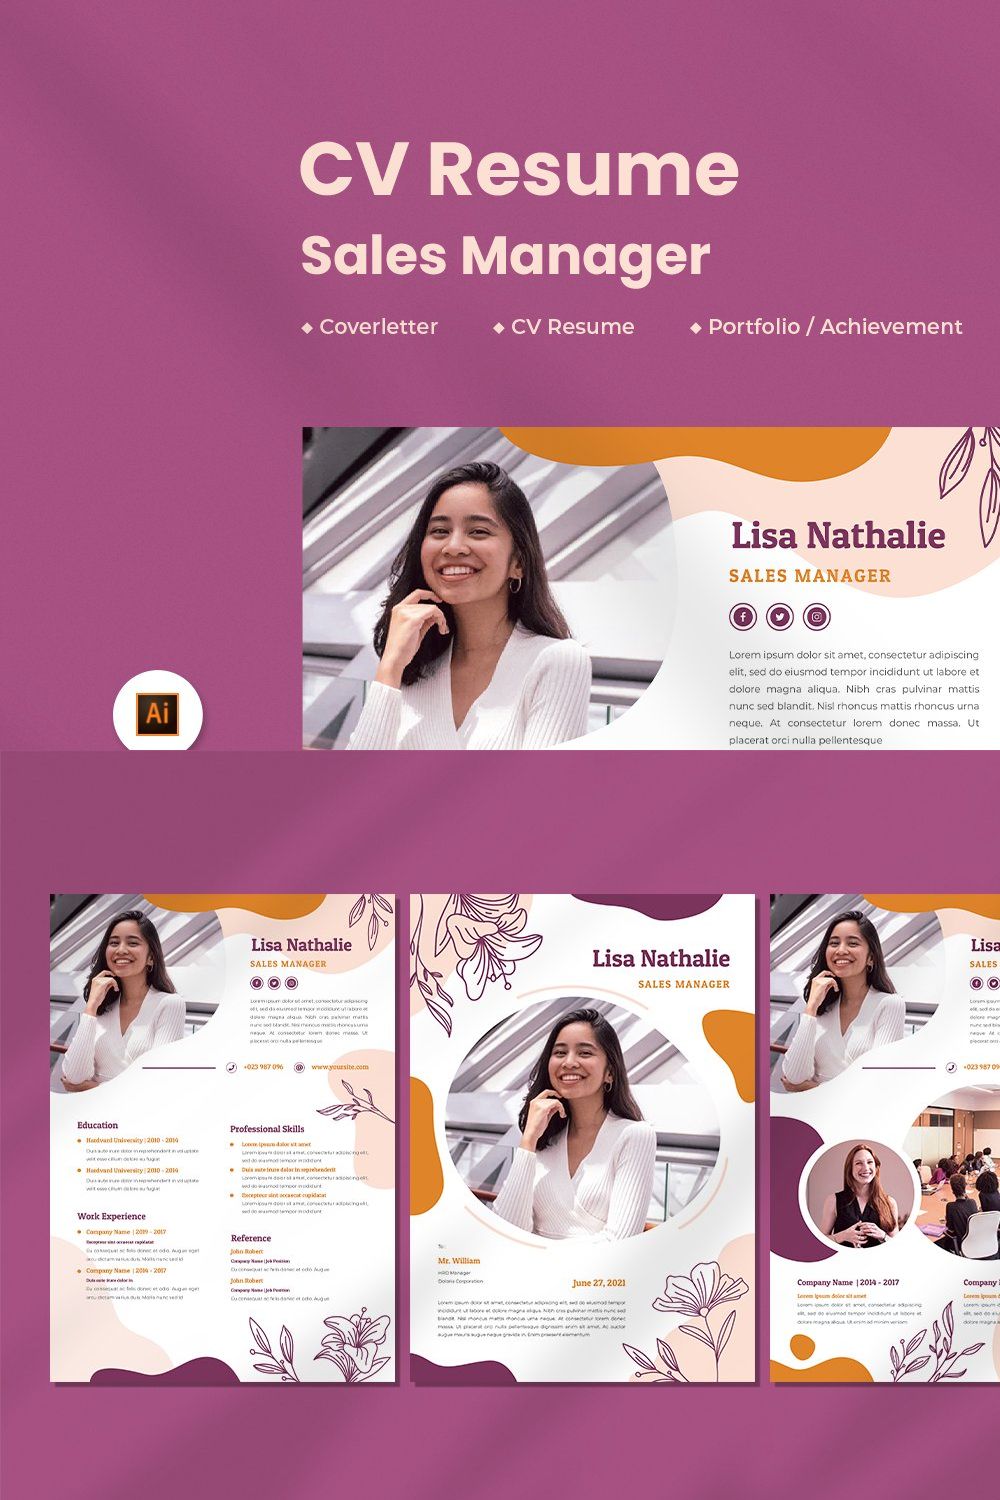 Sales Manager CV Resume pinterest preview image.